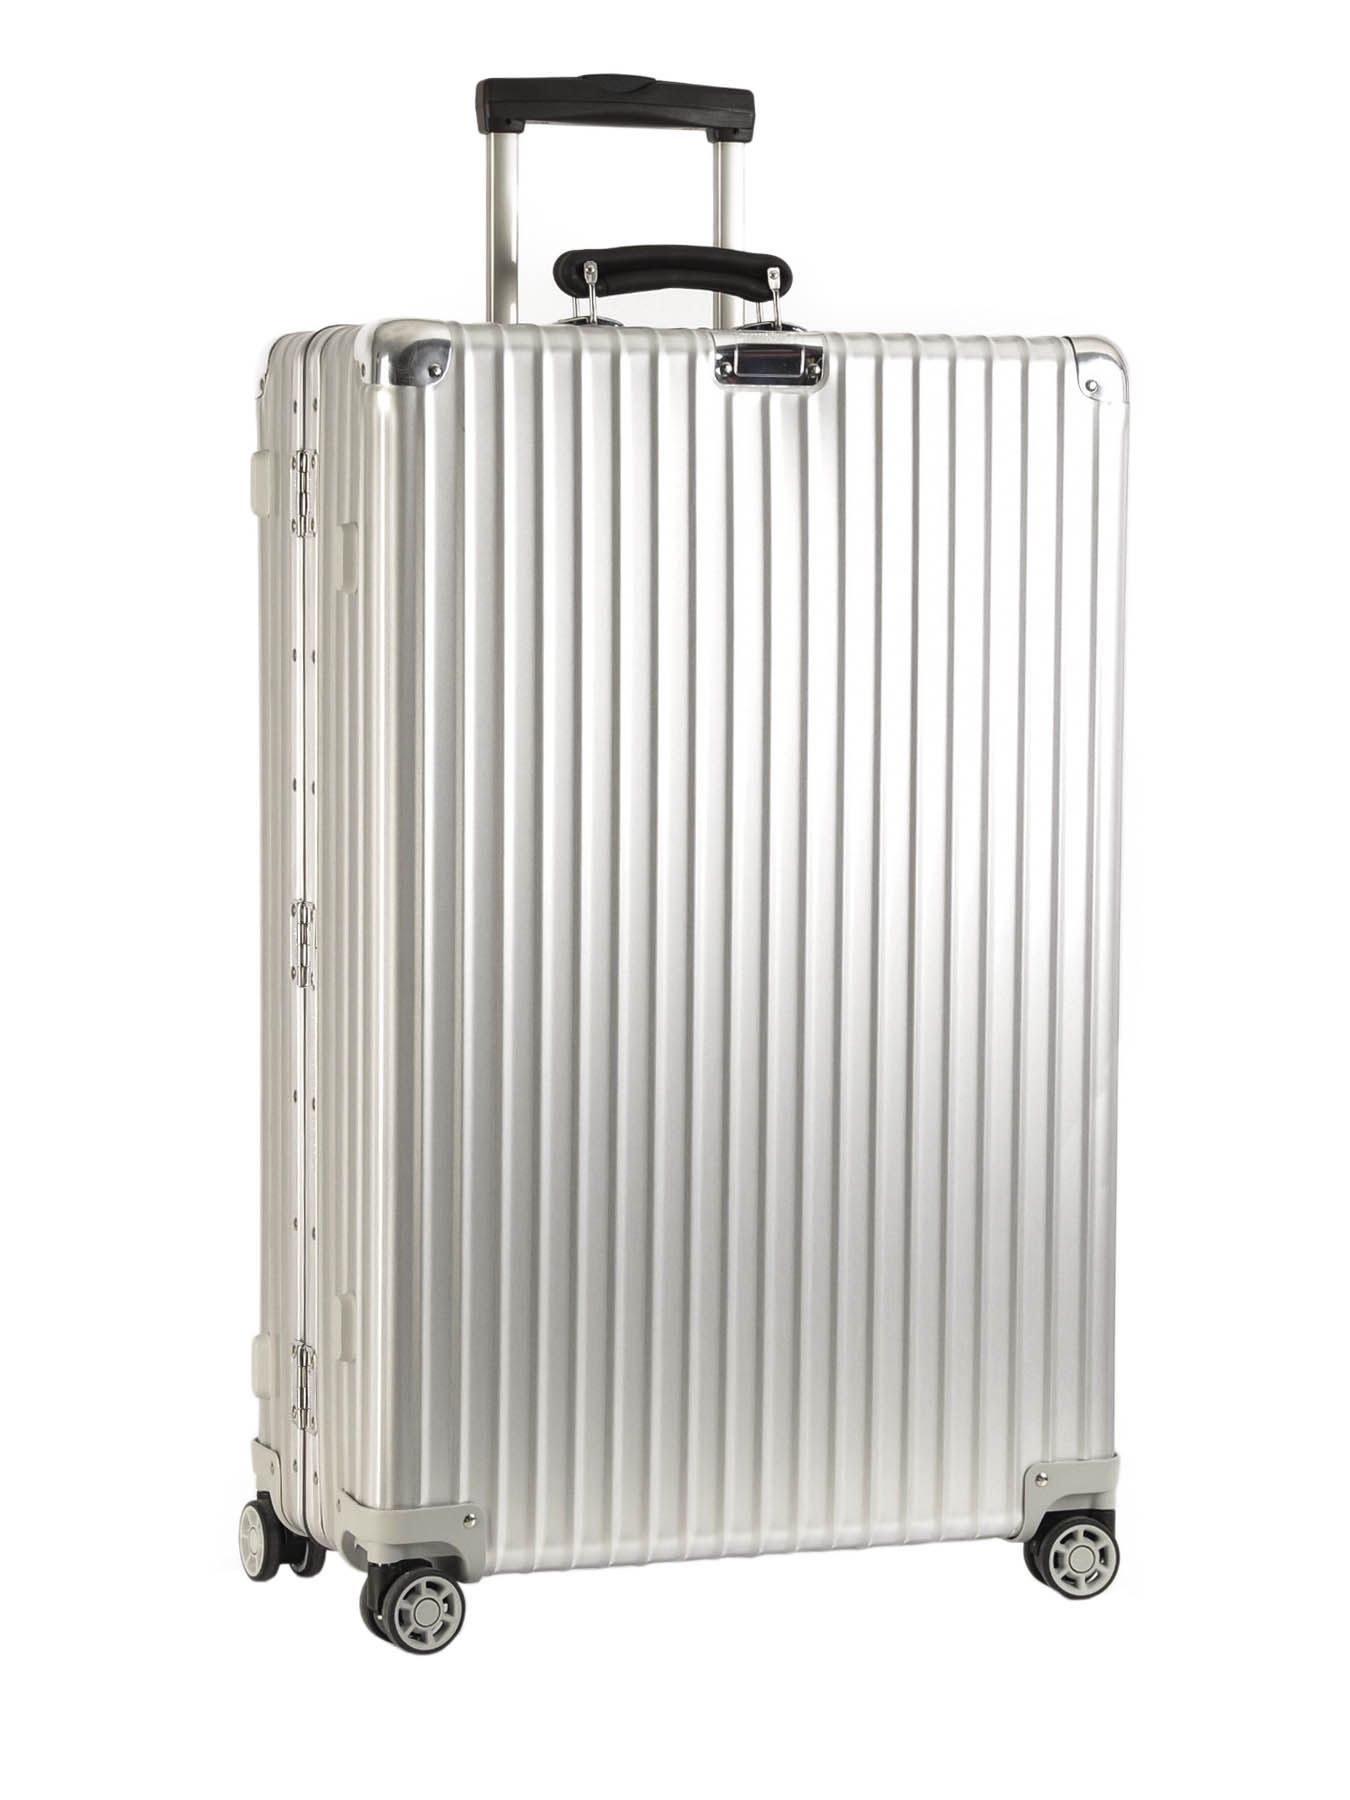 Rimowa Hardside luggage 971.73.00.4 sur edisac.com